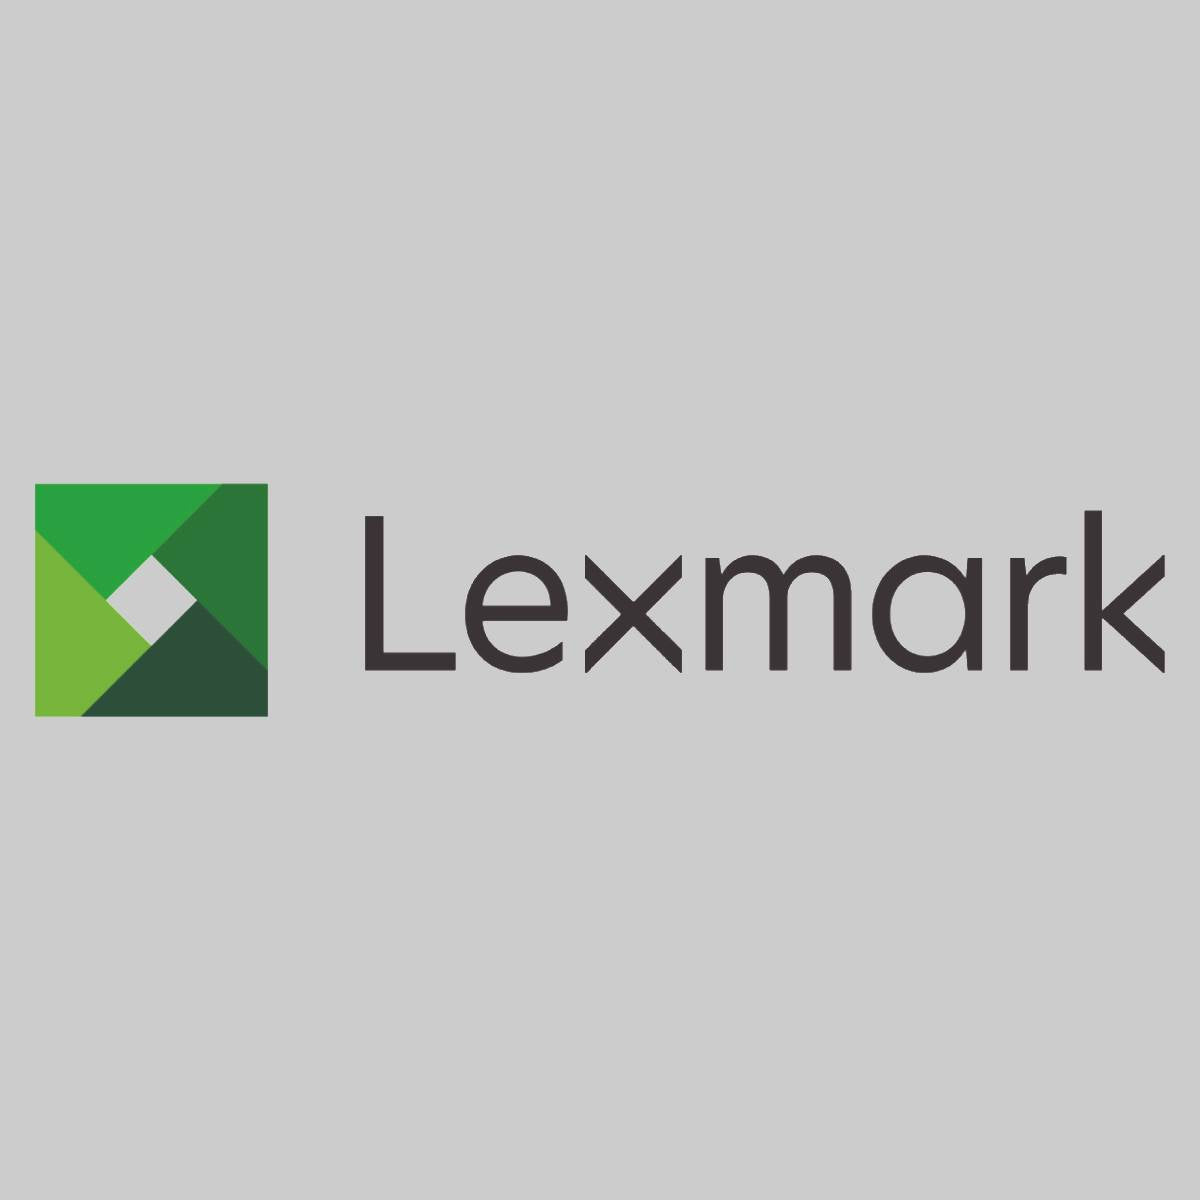 Originele Lexmark Linten 11A3540 voor Lexmark 2380 2381 2391 2480 2580 2581 PLUS